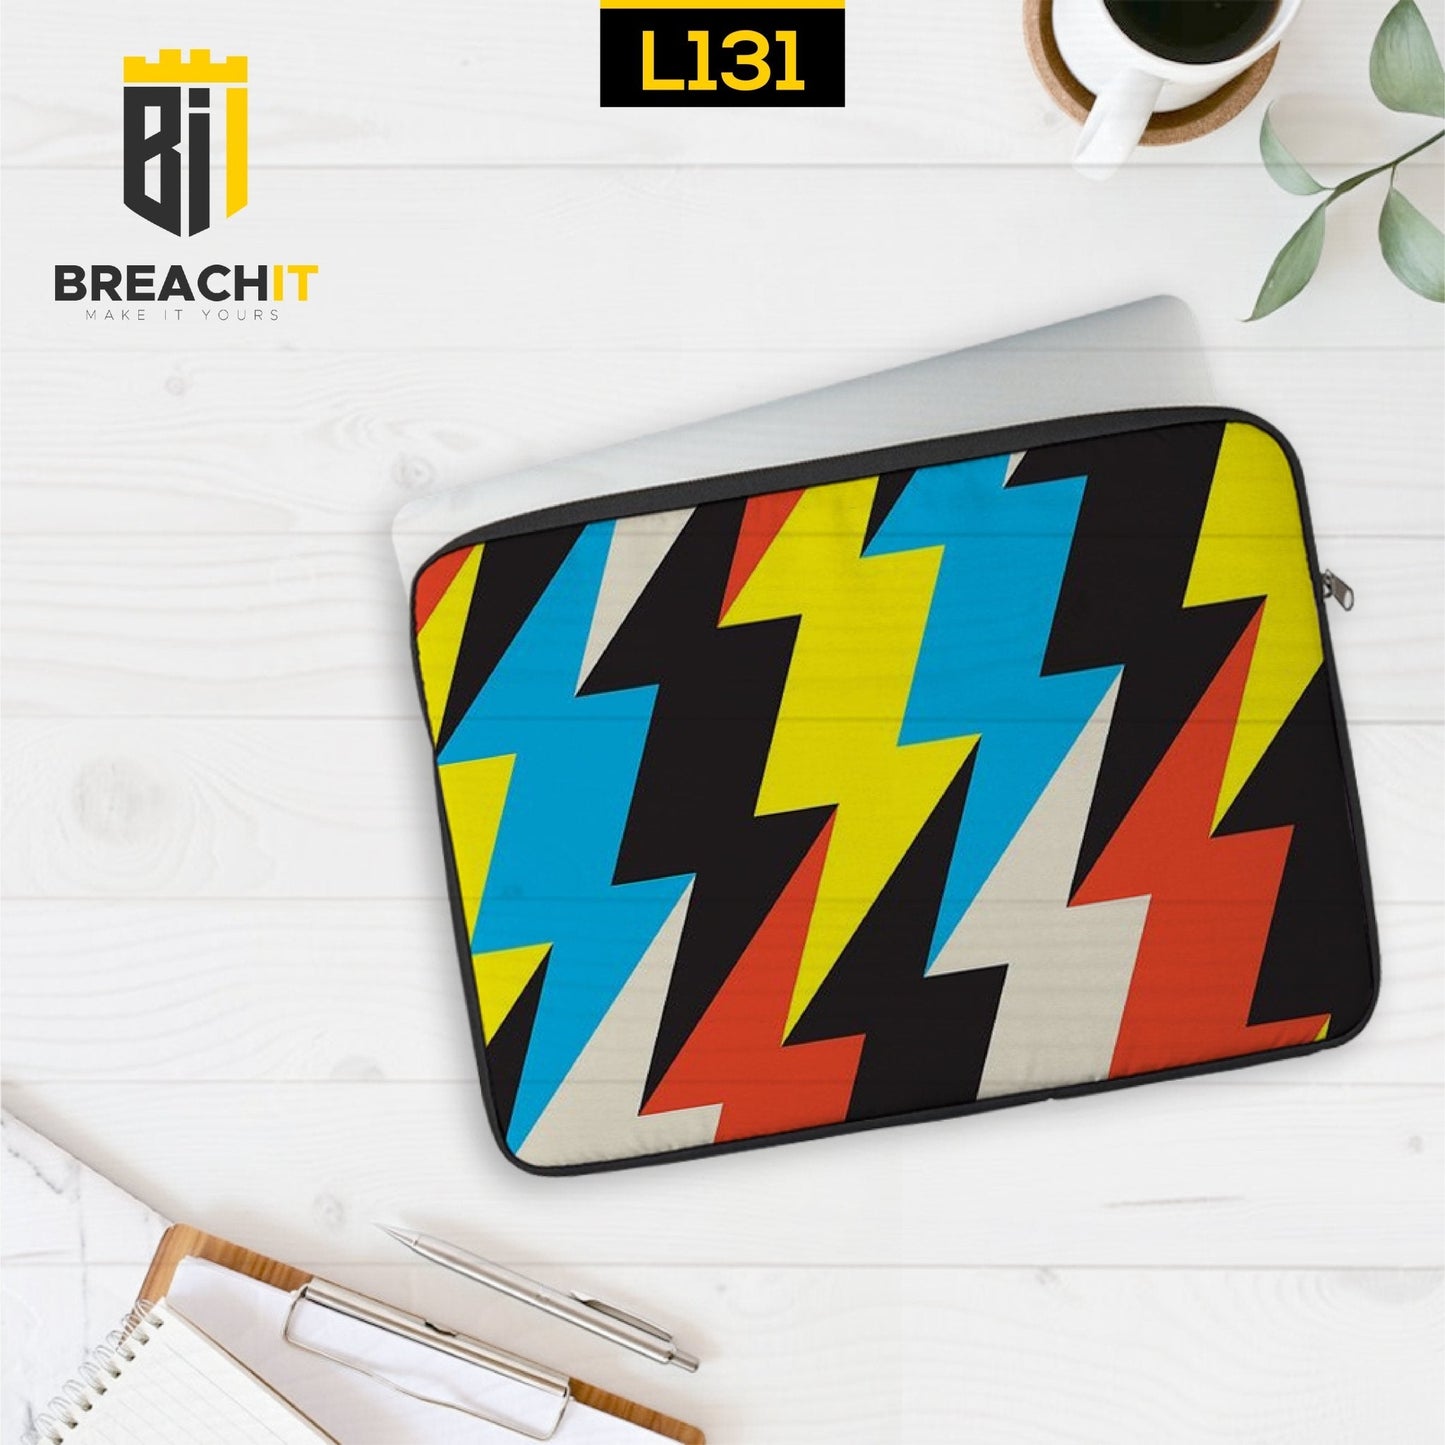 L131 Colorful Laptop Sleeve - BREACHIT